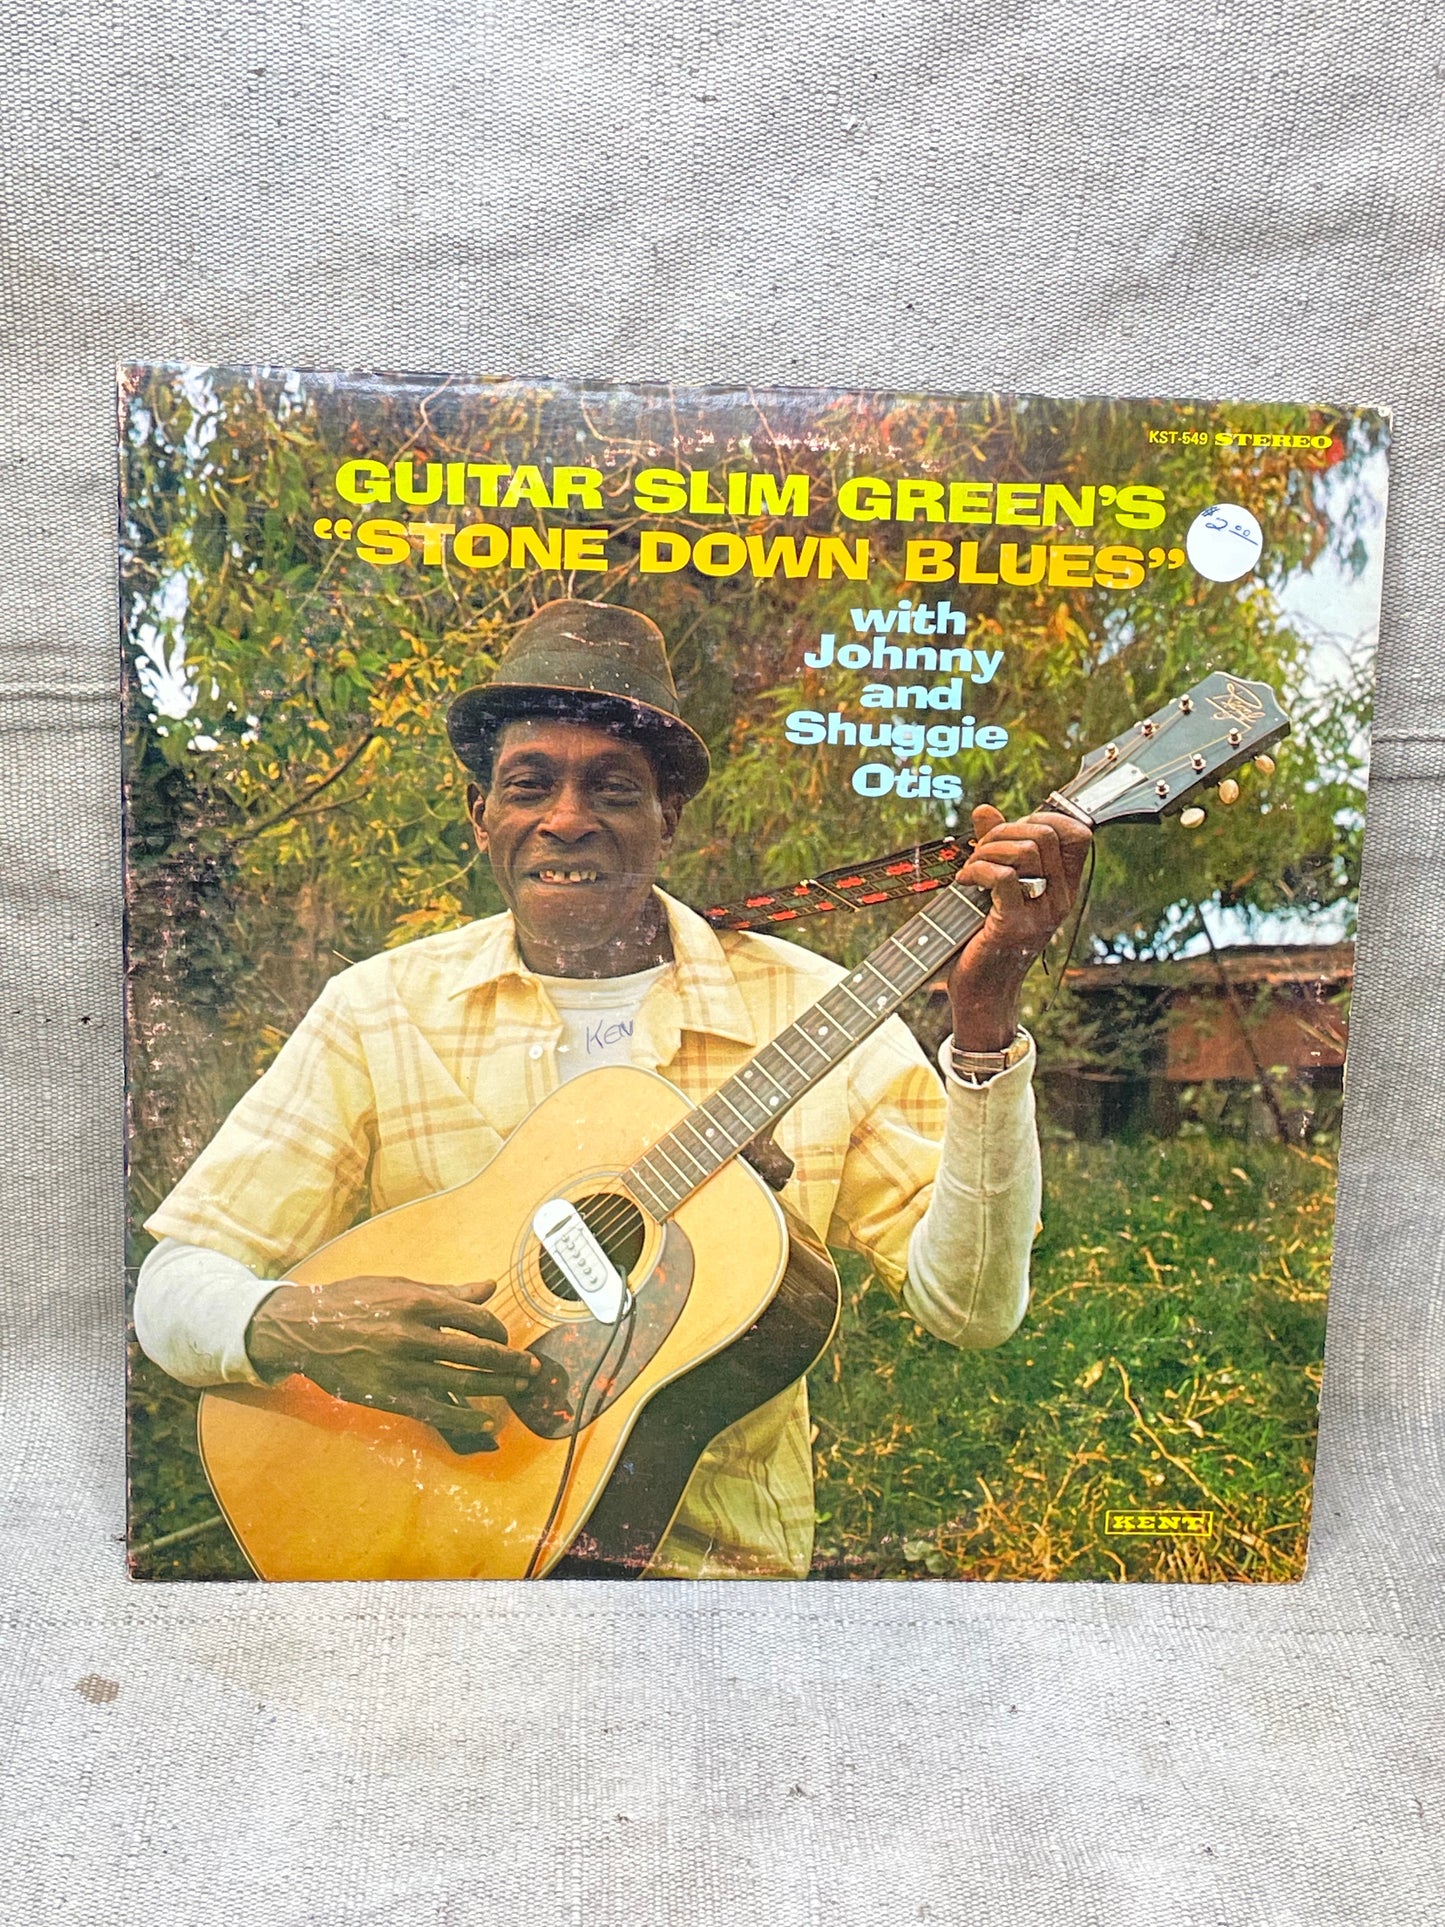 Vintage G G- Guitar Slim Green’s Stone Down Blues LP Record LP